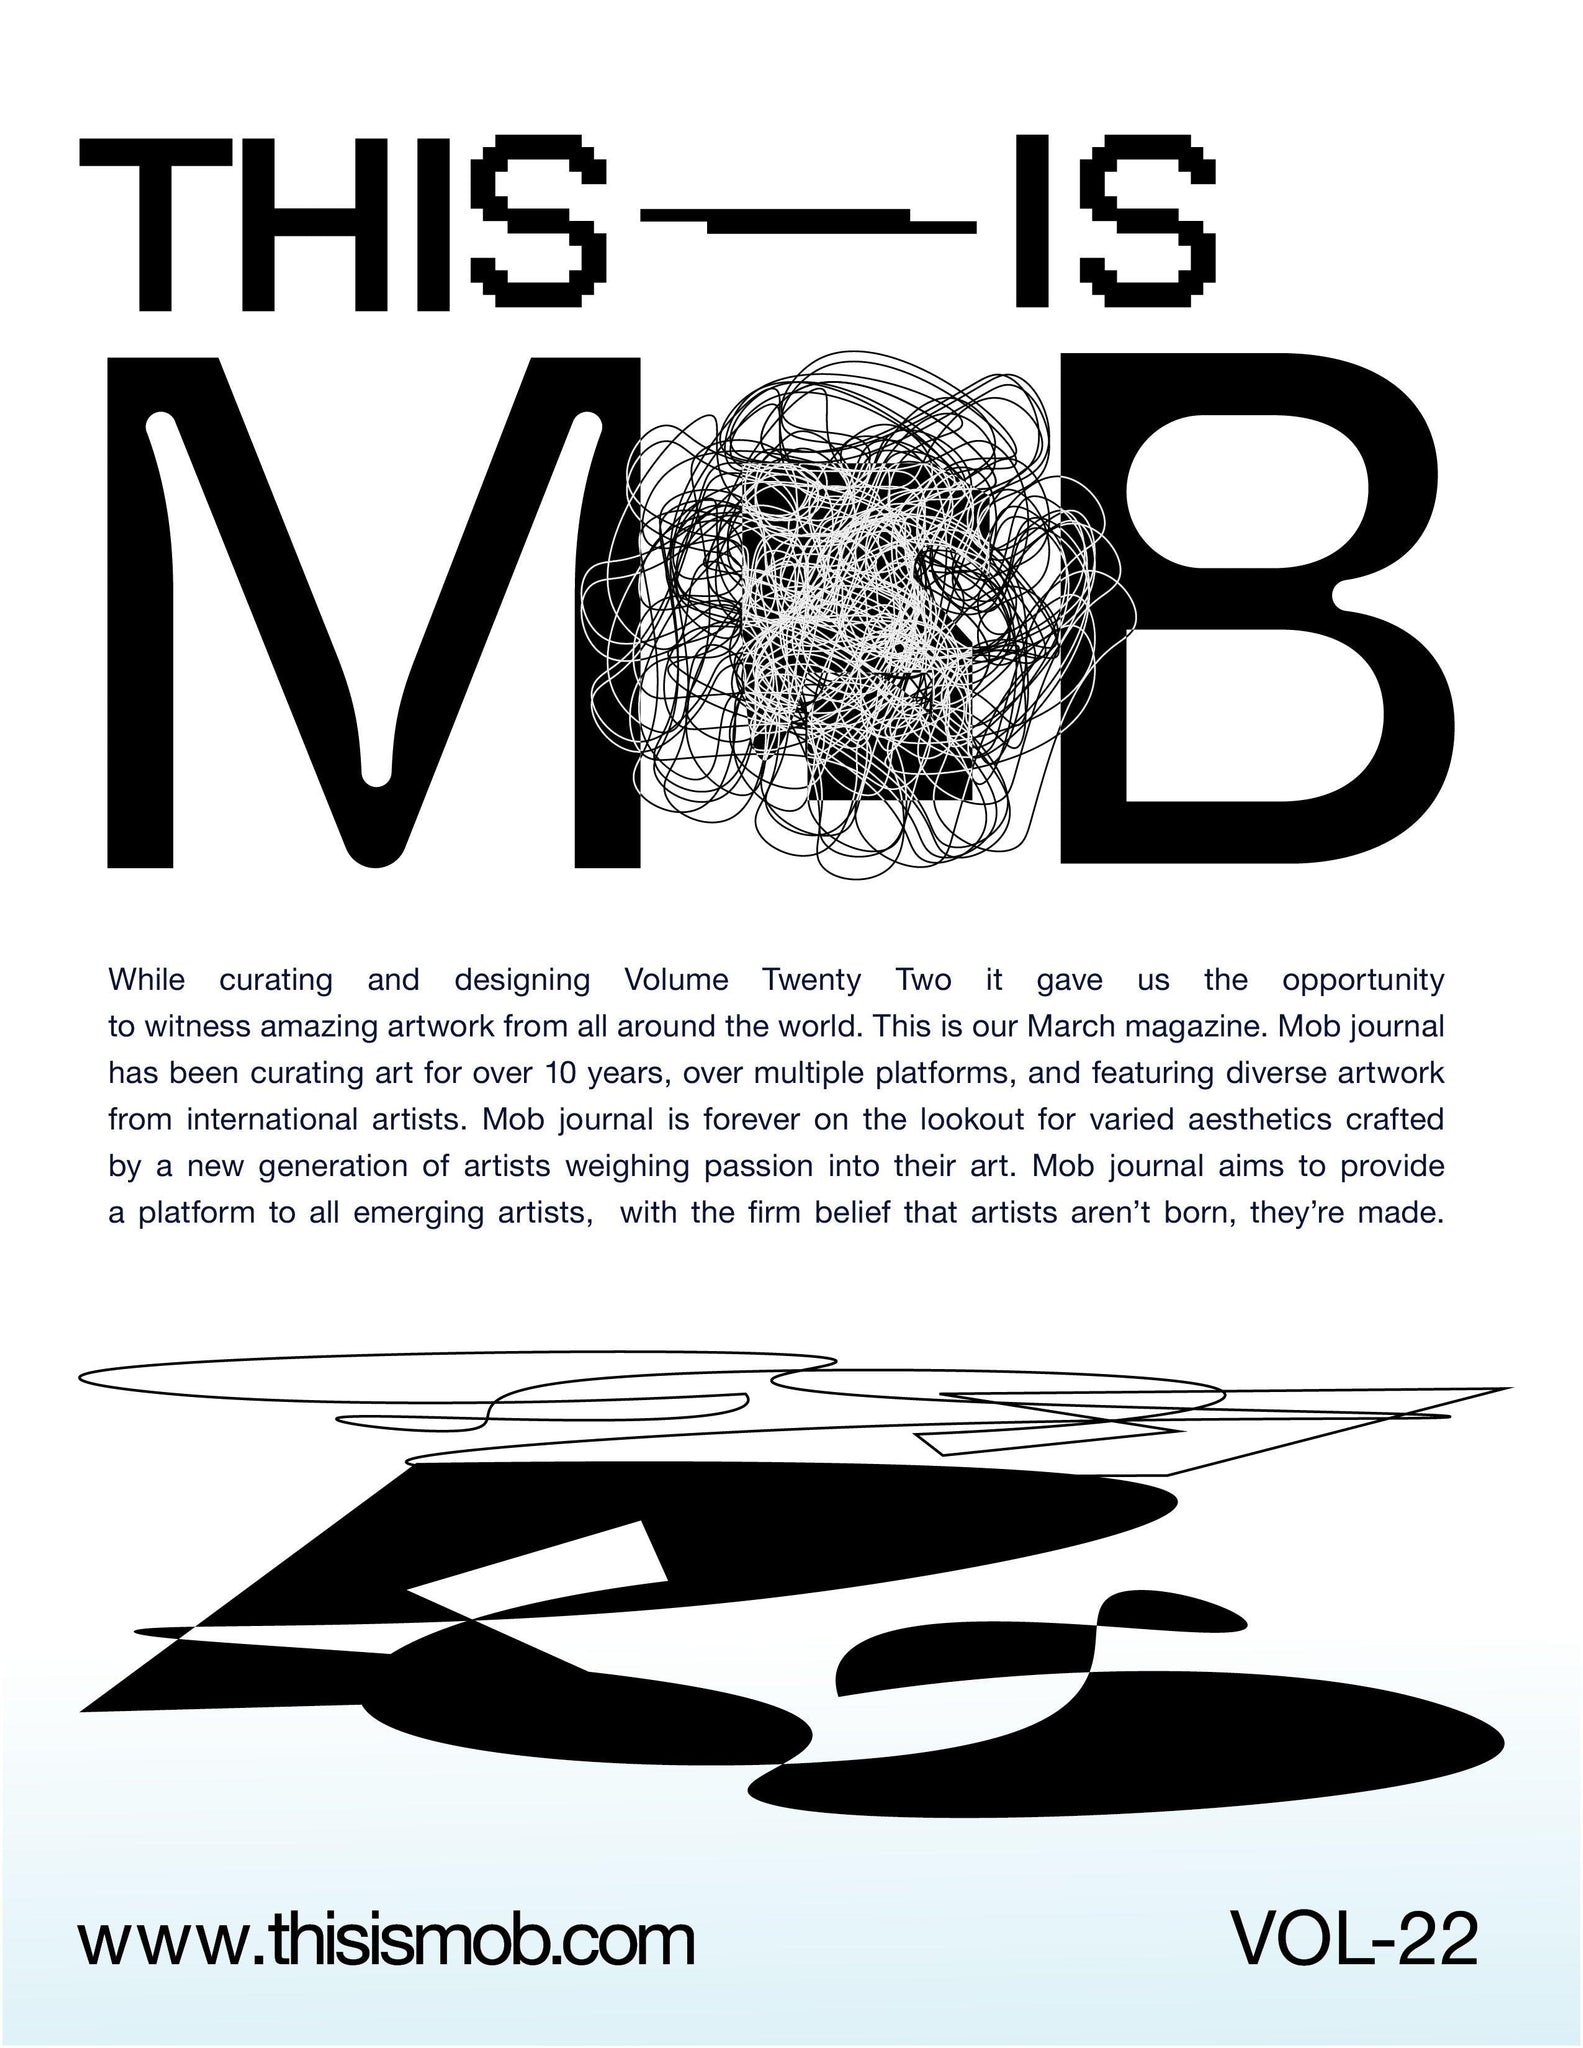 MOB JOURNAL | VOLUME TWENTY TWO | ISSUE #46 - Mob Journal